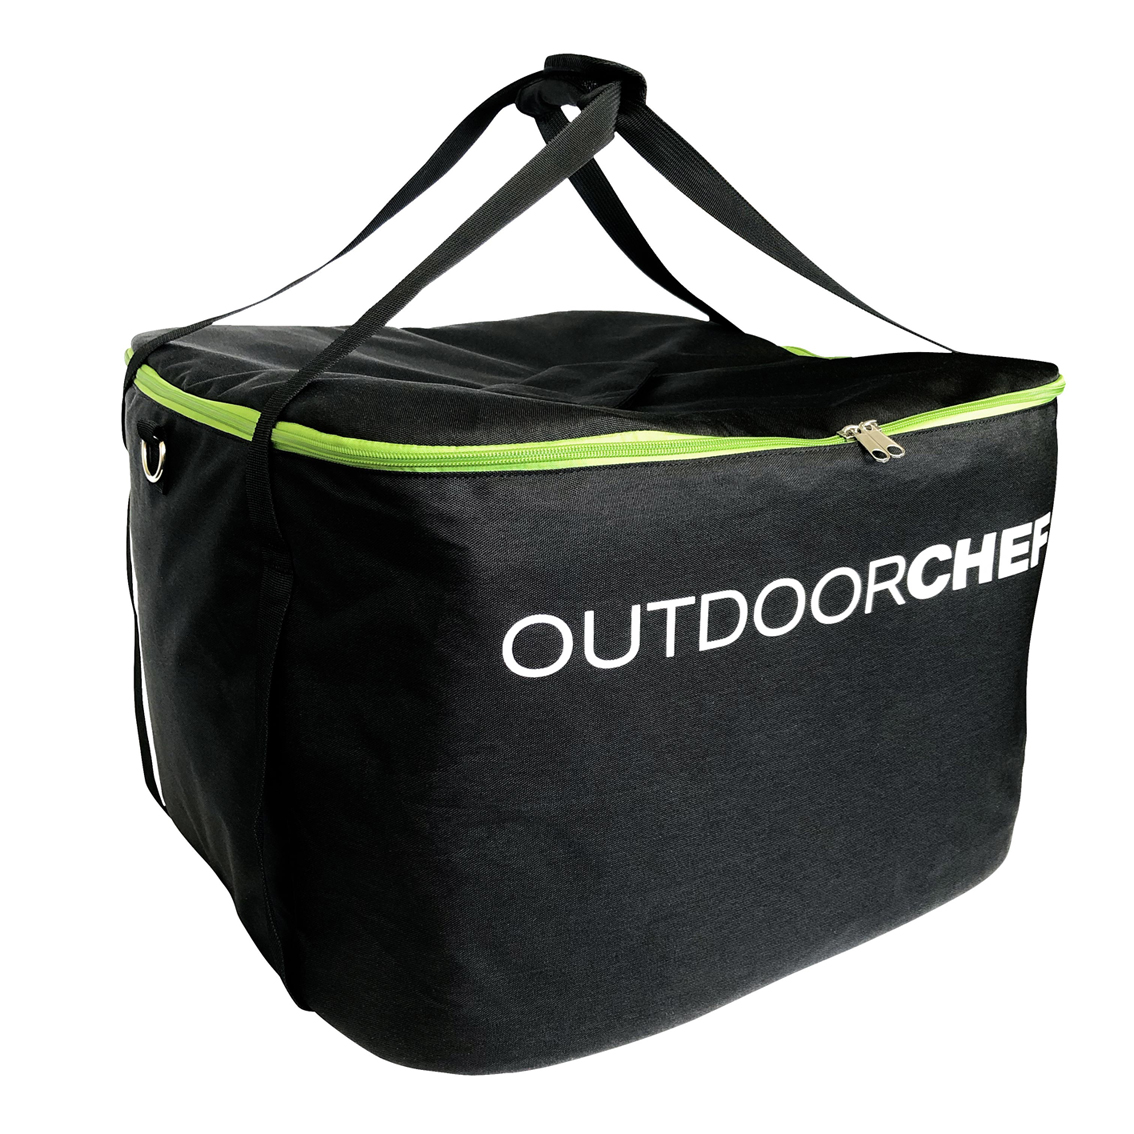 OutdoorCHEF Camping Bag